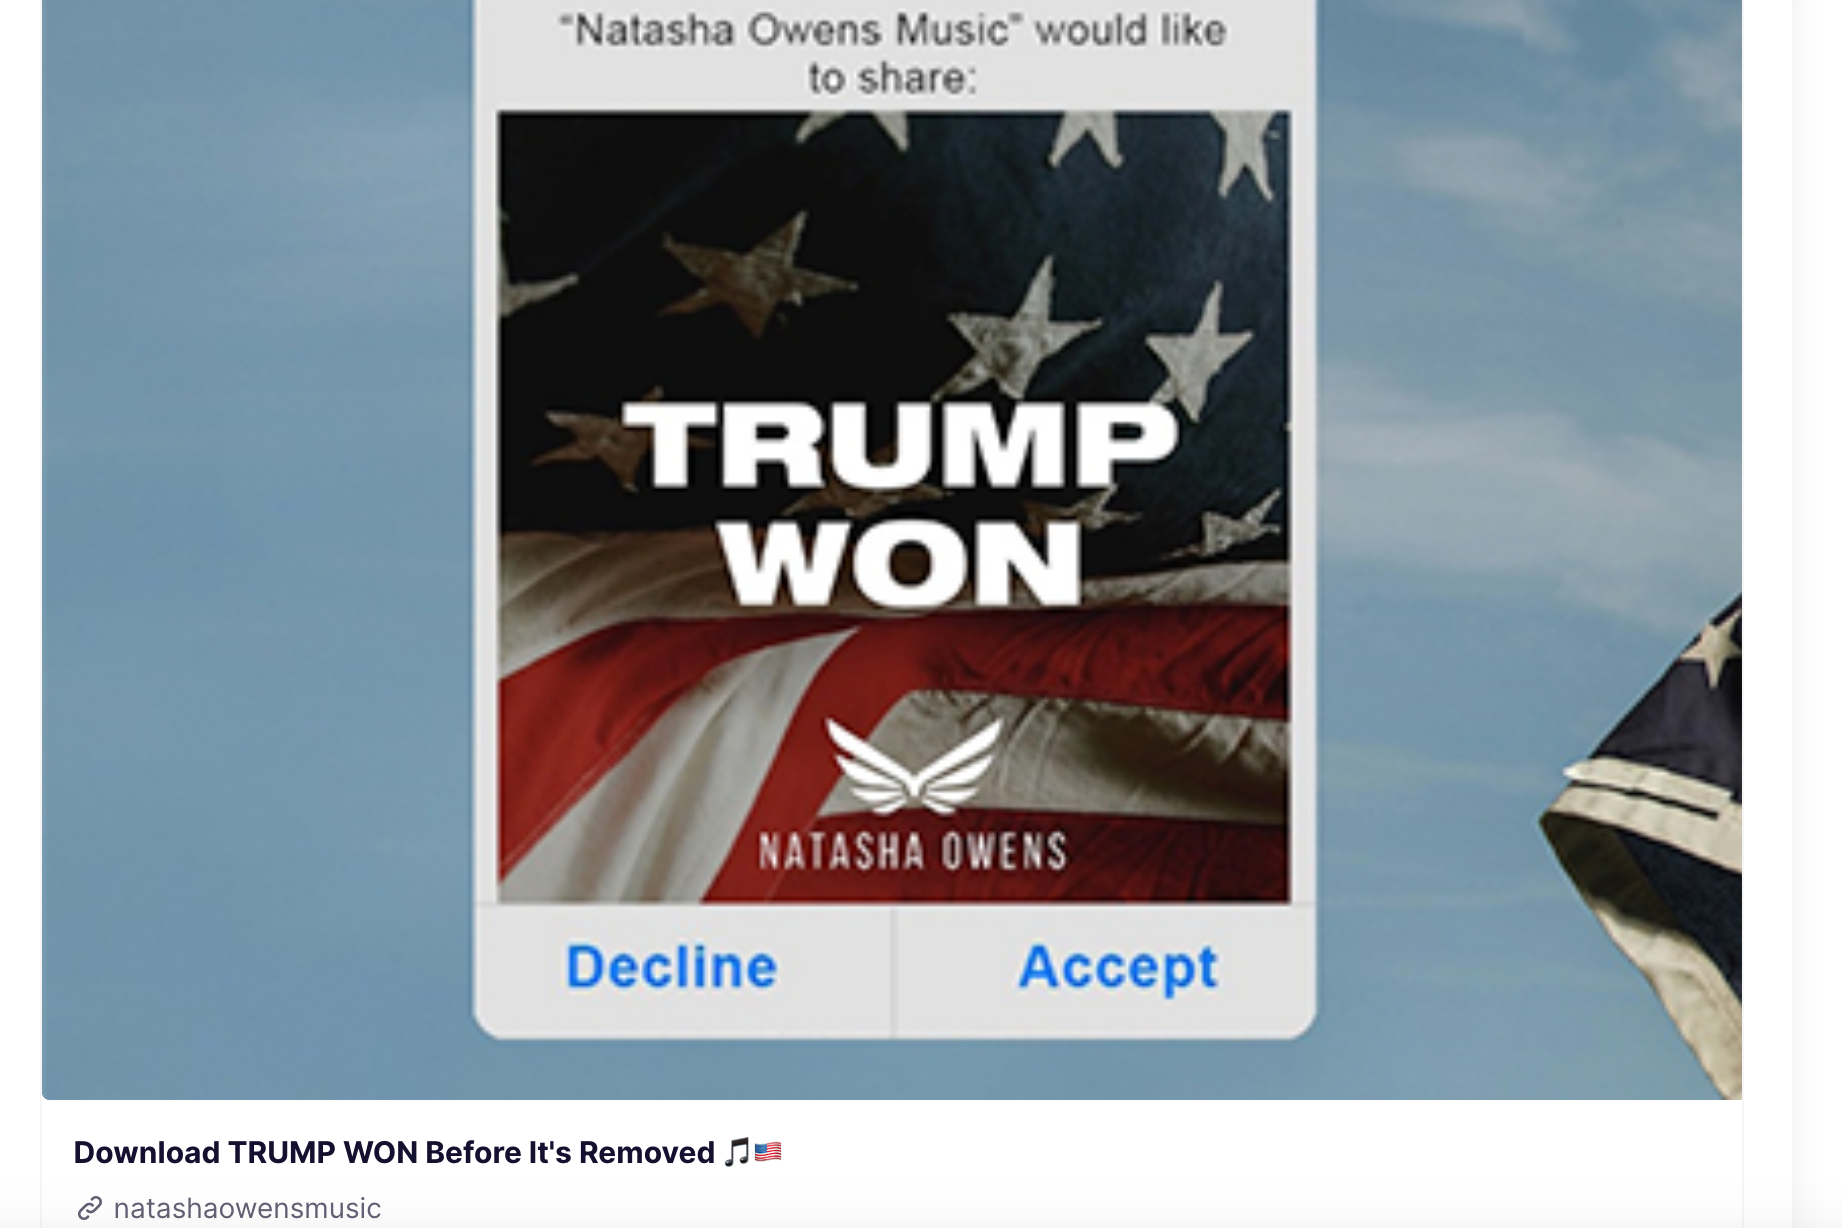 A digital advertisement for the Natasha Owens song "Trump Won"